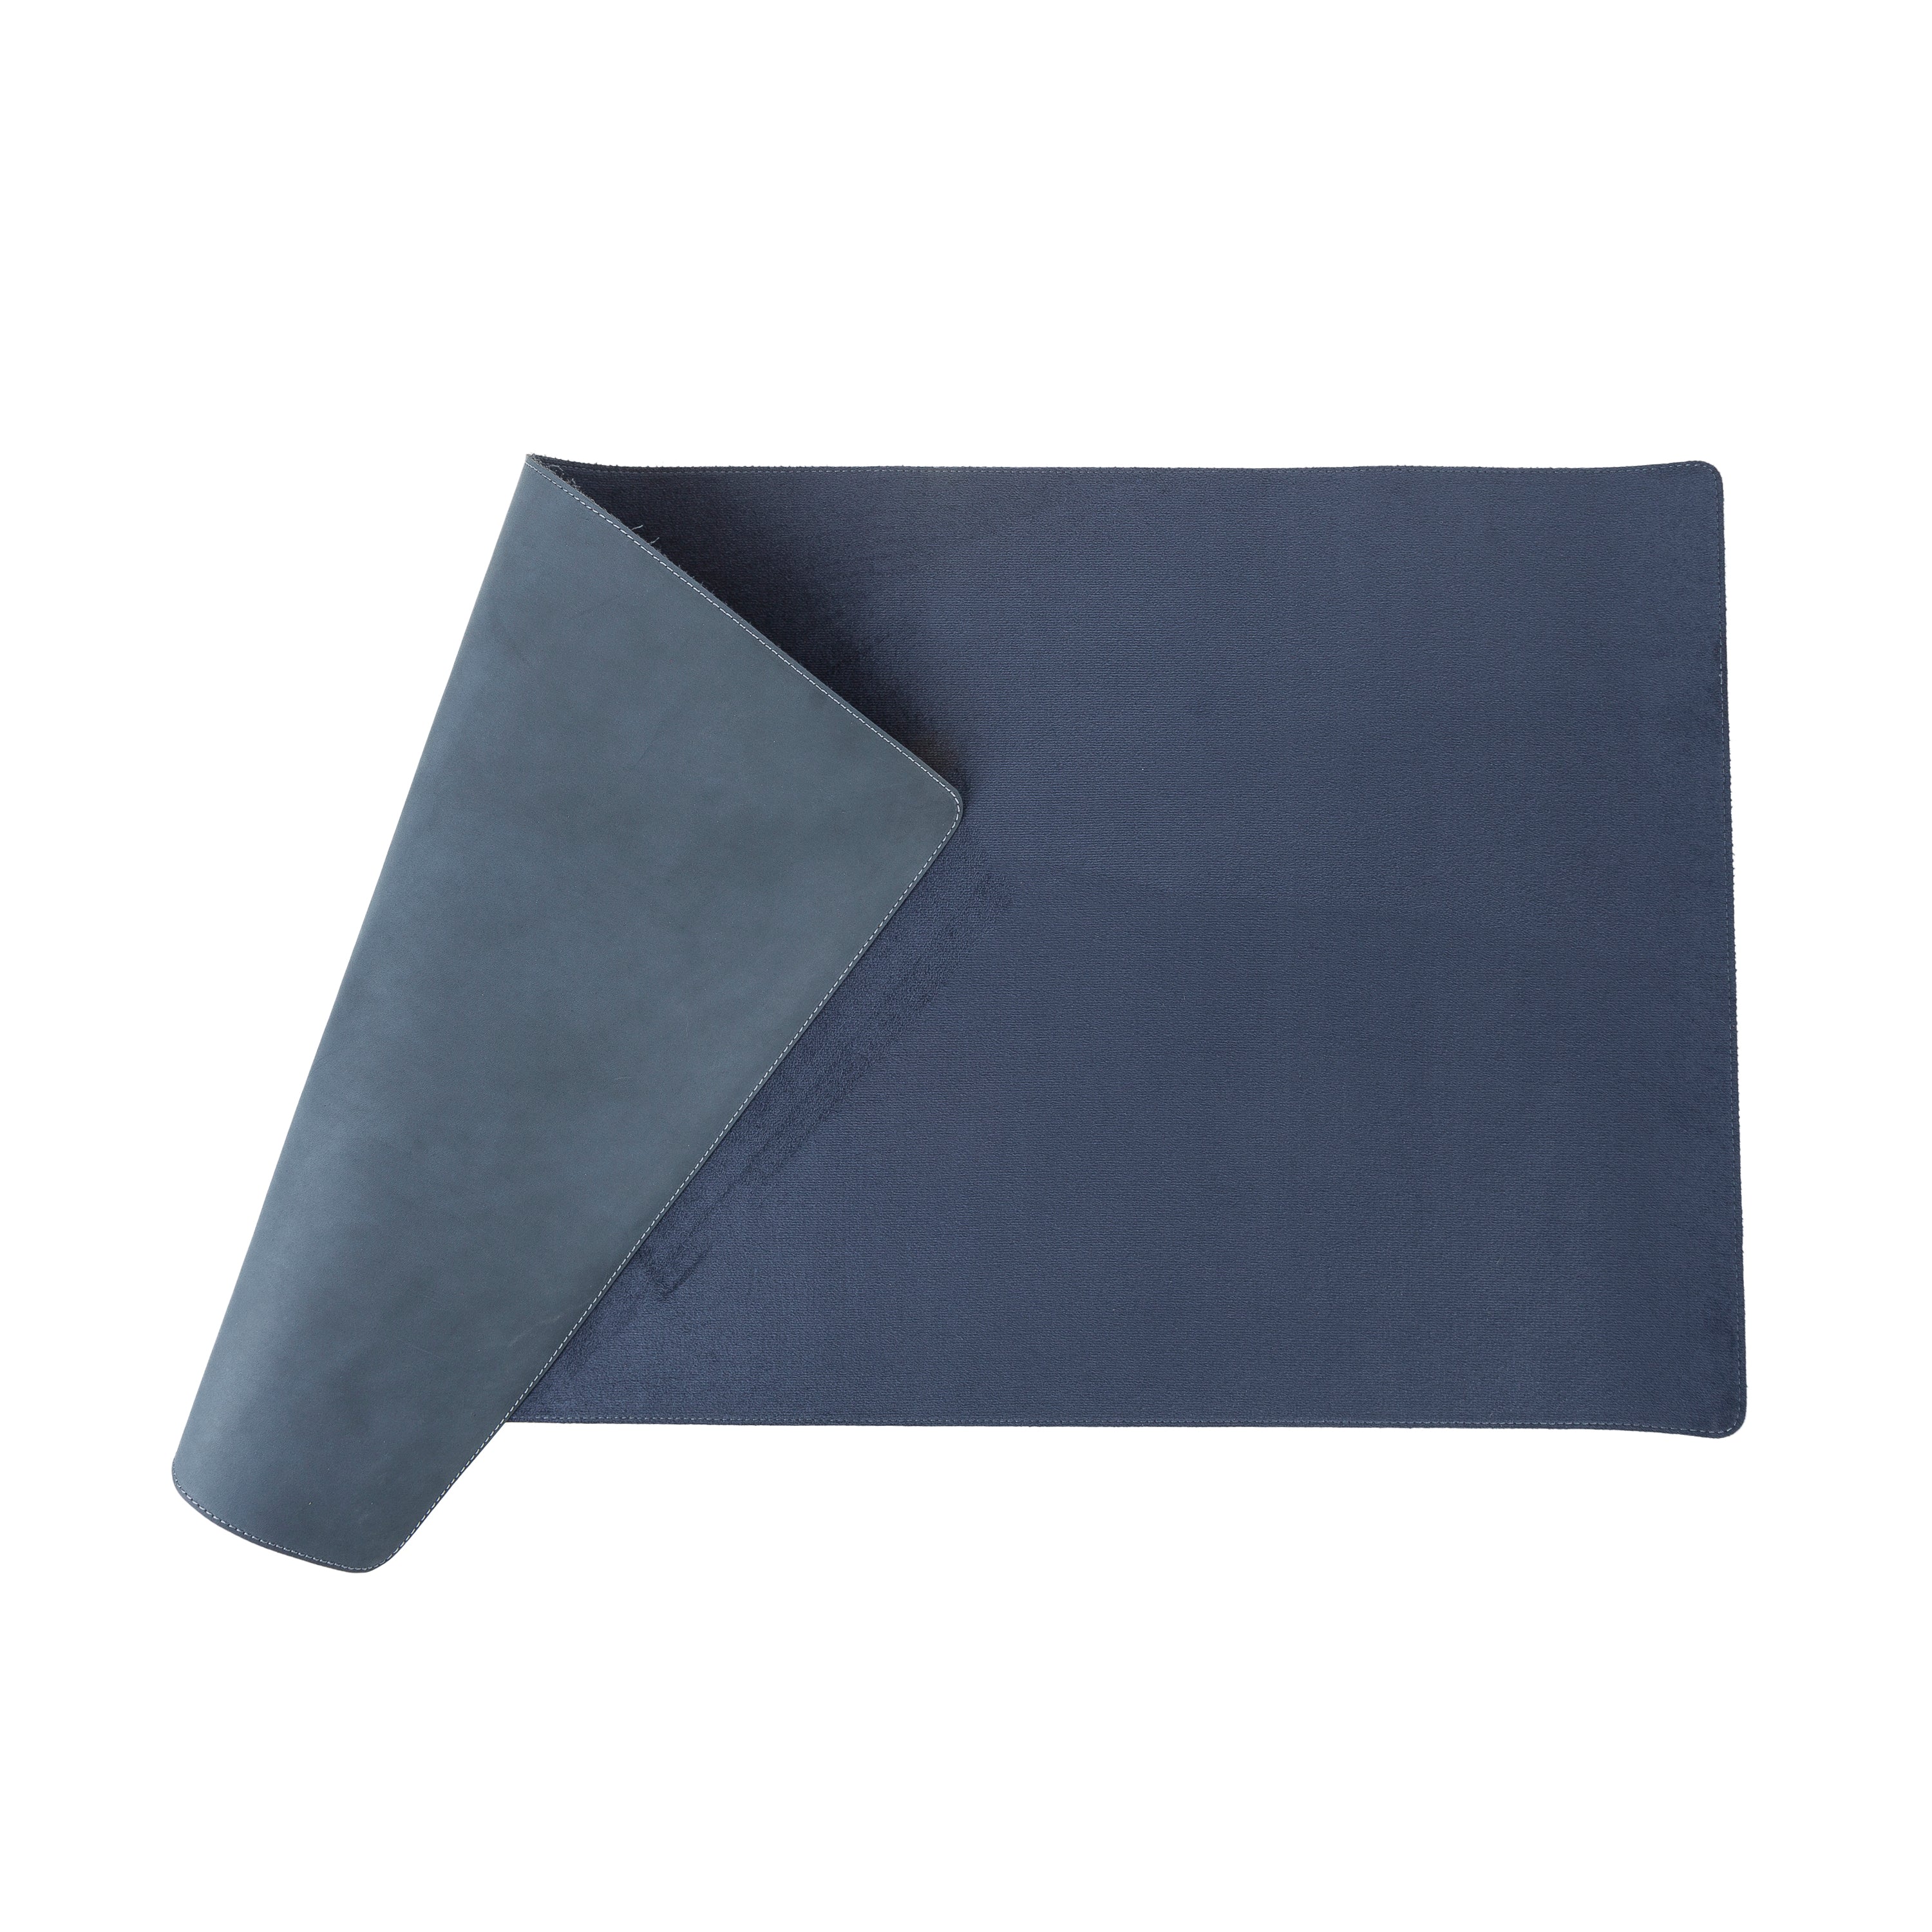 DelfiCase Genuine Blue Leather Deskmat, Computer Pad, Office Desk Pad 7